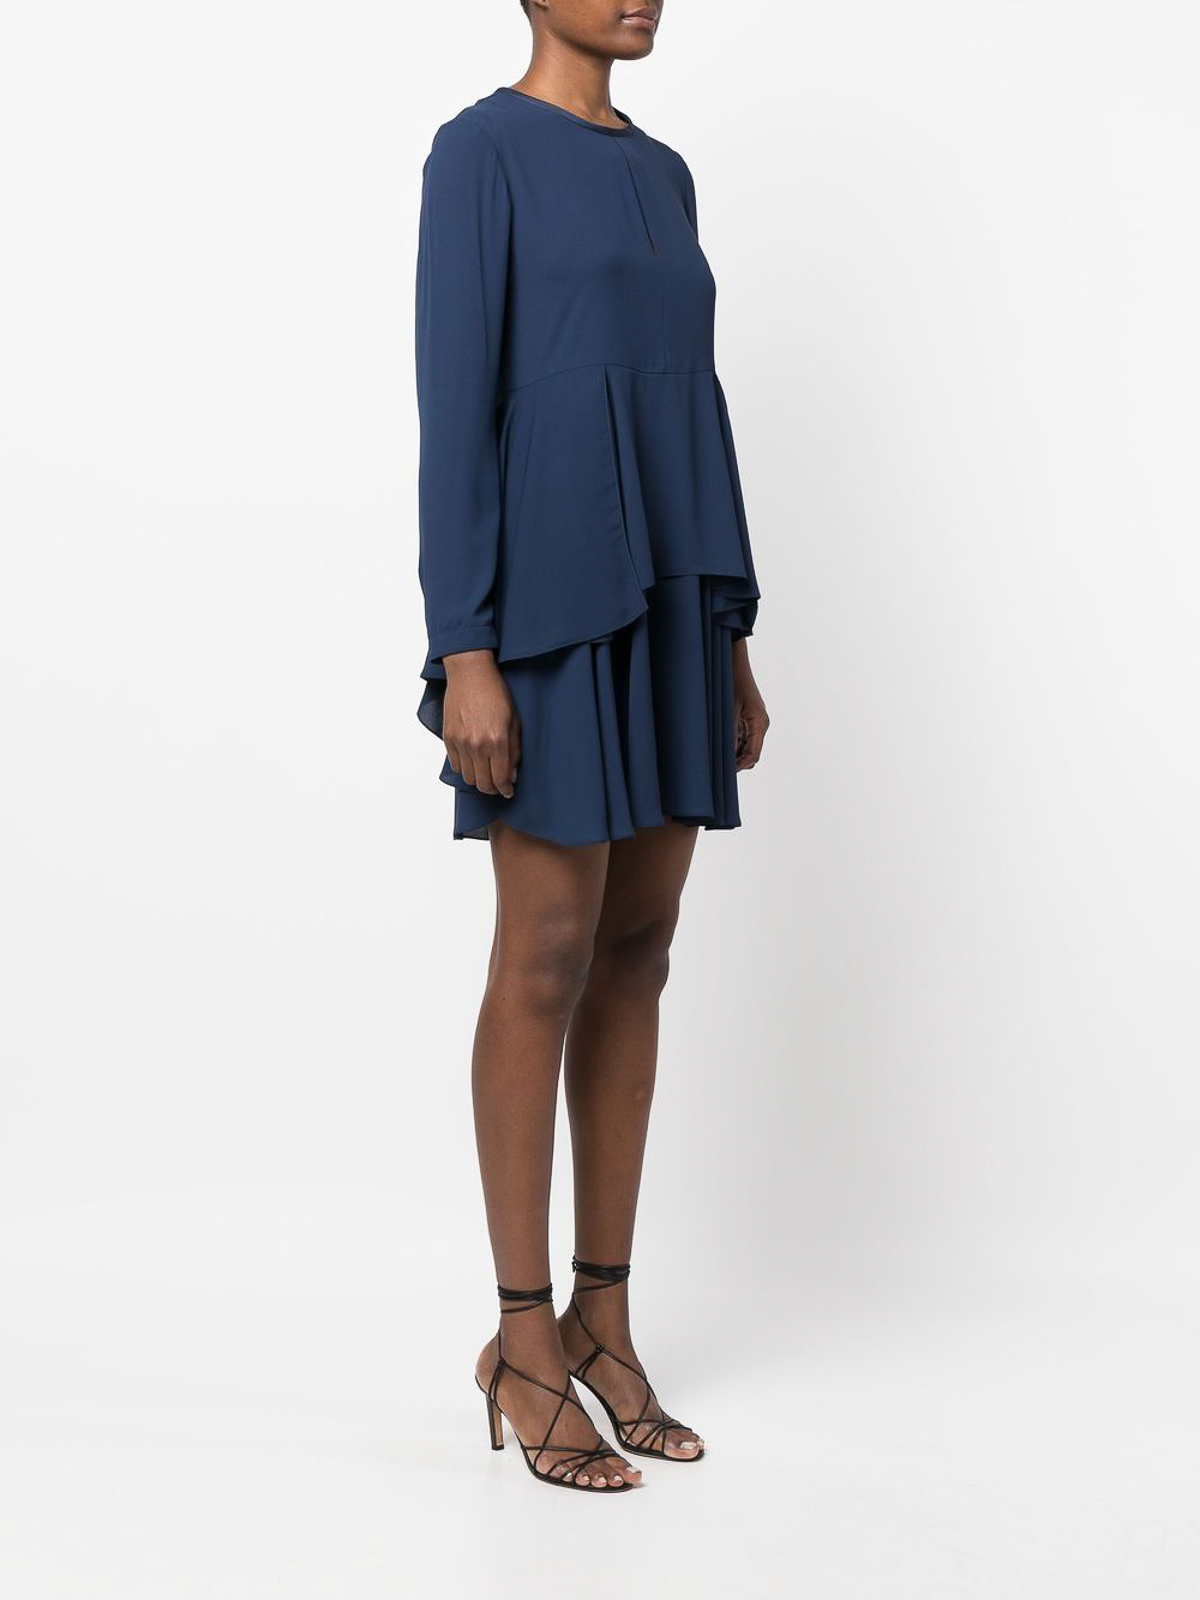 FhyzicsShops | Buy Women's Vero Moda Barbour International Jumper fabric  Dress Casual fabric Dresses Online | Жіночі сорочки gloria jeans в запоріжжі